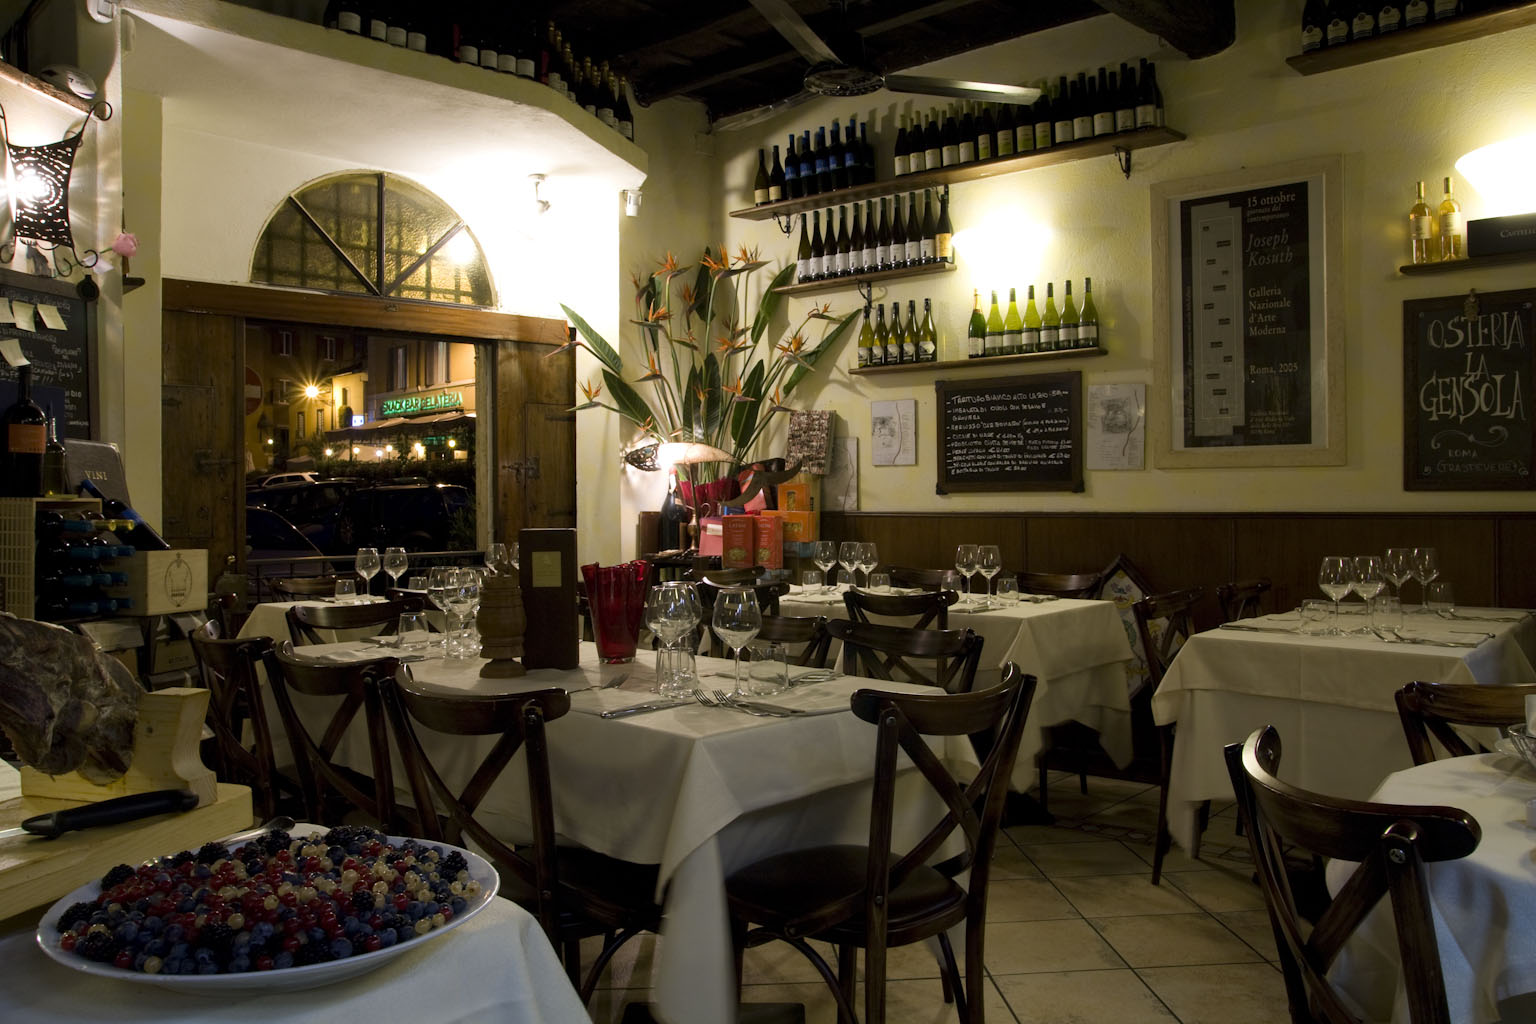 Italy’s Covid-hit restaurant sector cautiously optimistic